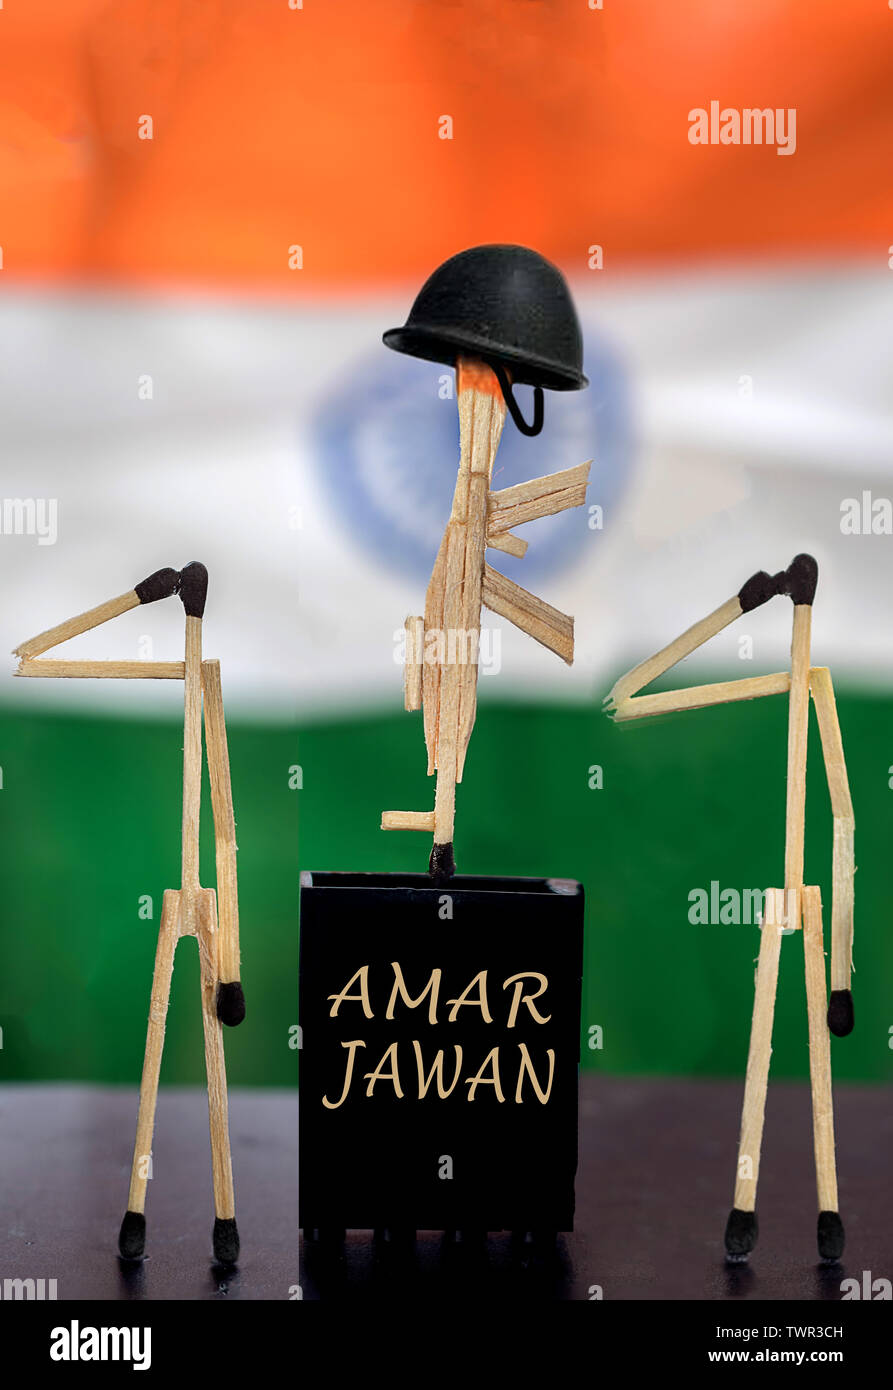 Creative Photography of Amar Jawanusing Matches Stick Stock Photo